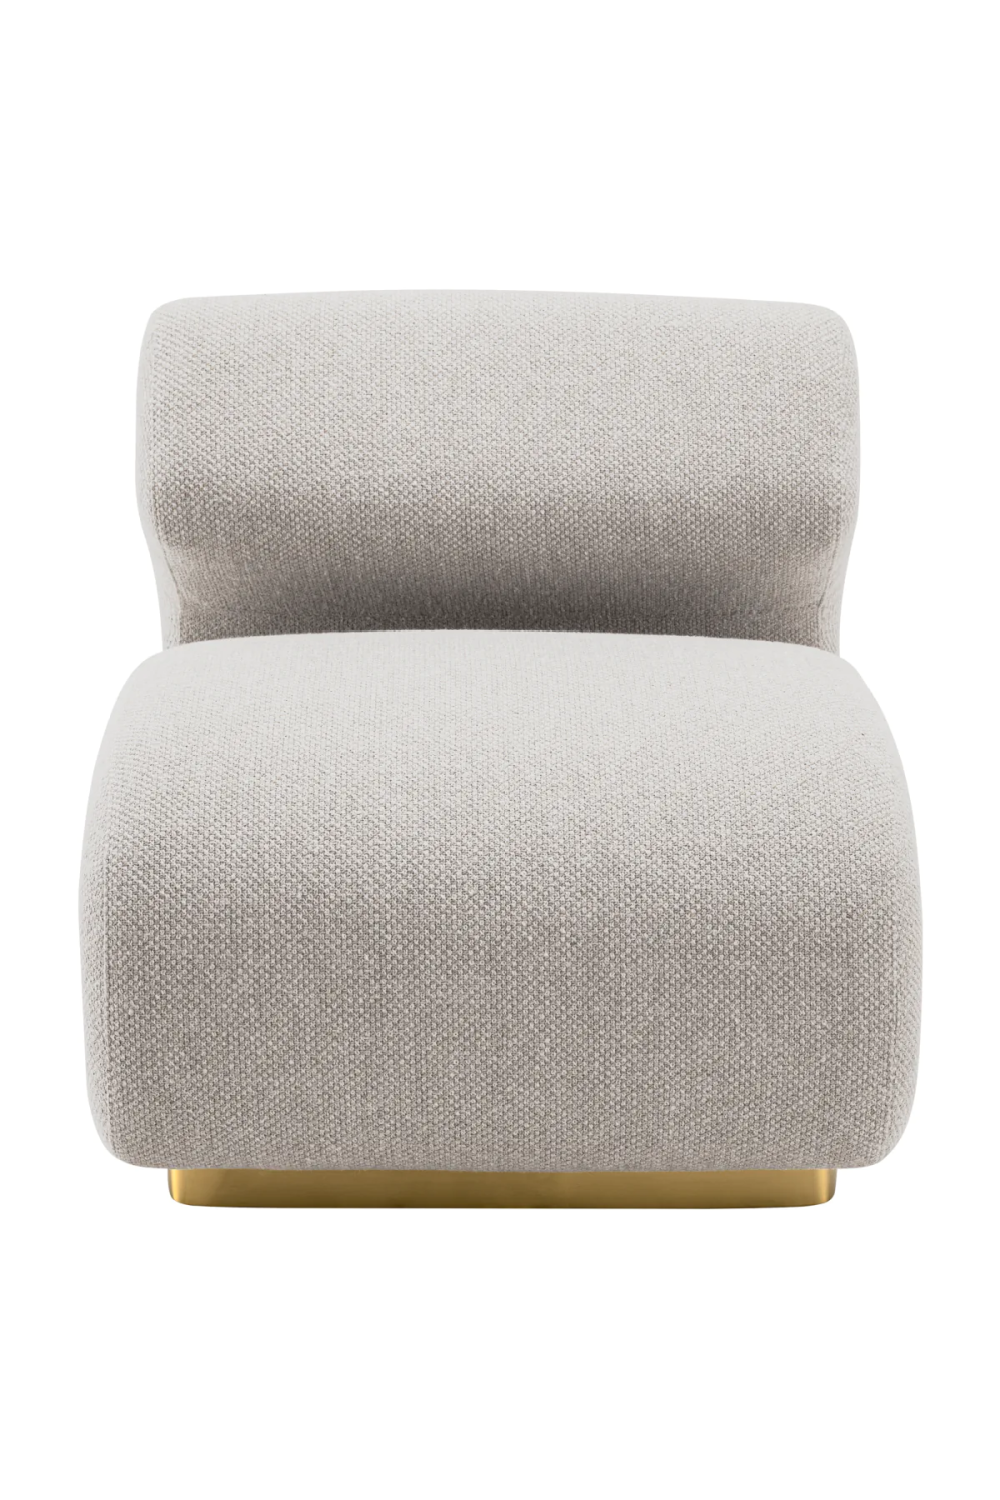 Gray Modern Accent Chair | Eichholtz Sansome | Oroa.com